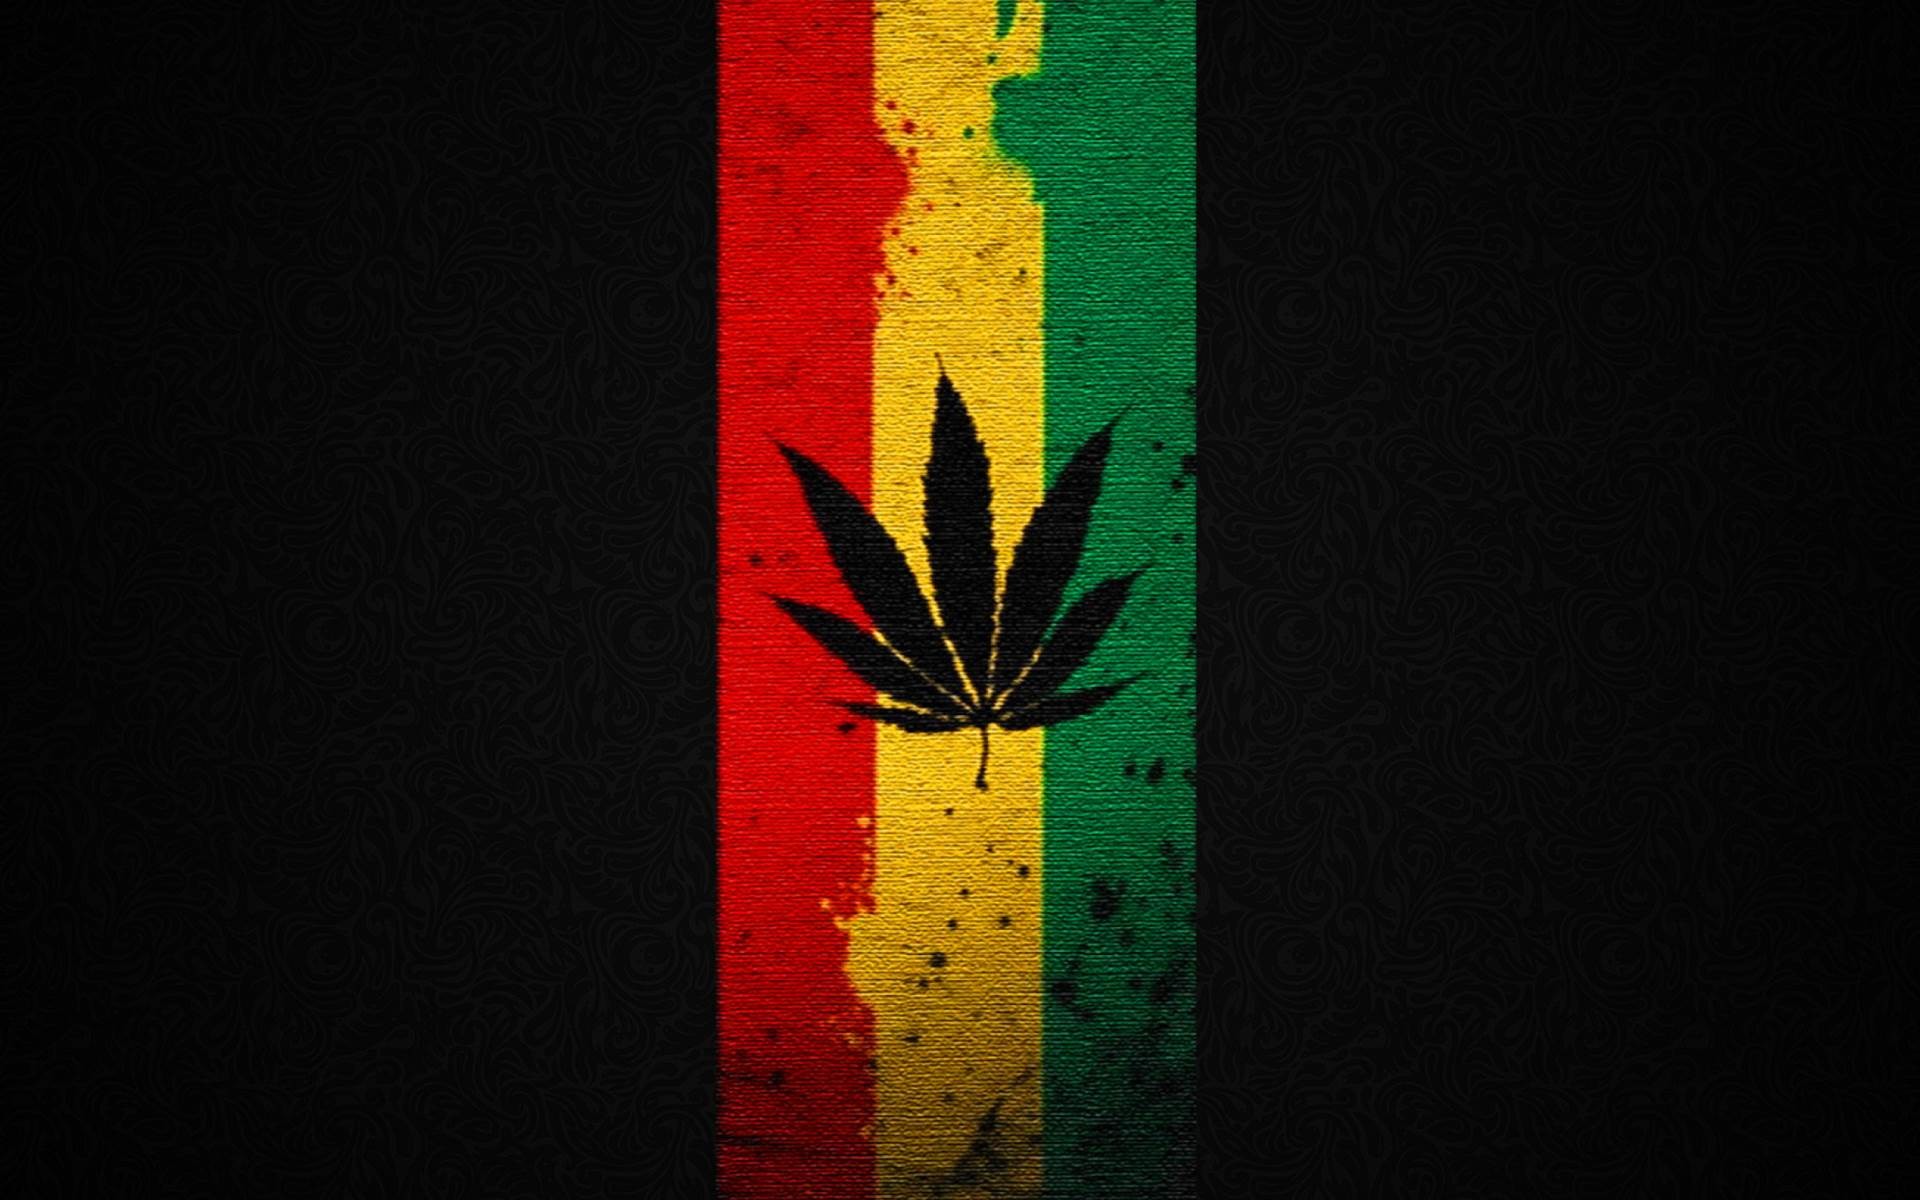 Dub reggae wallpaper downloads a kay singer new images of justin ãâ reggae wallpaper